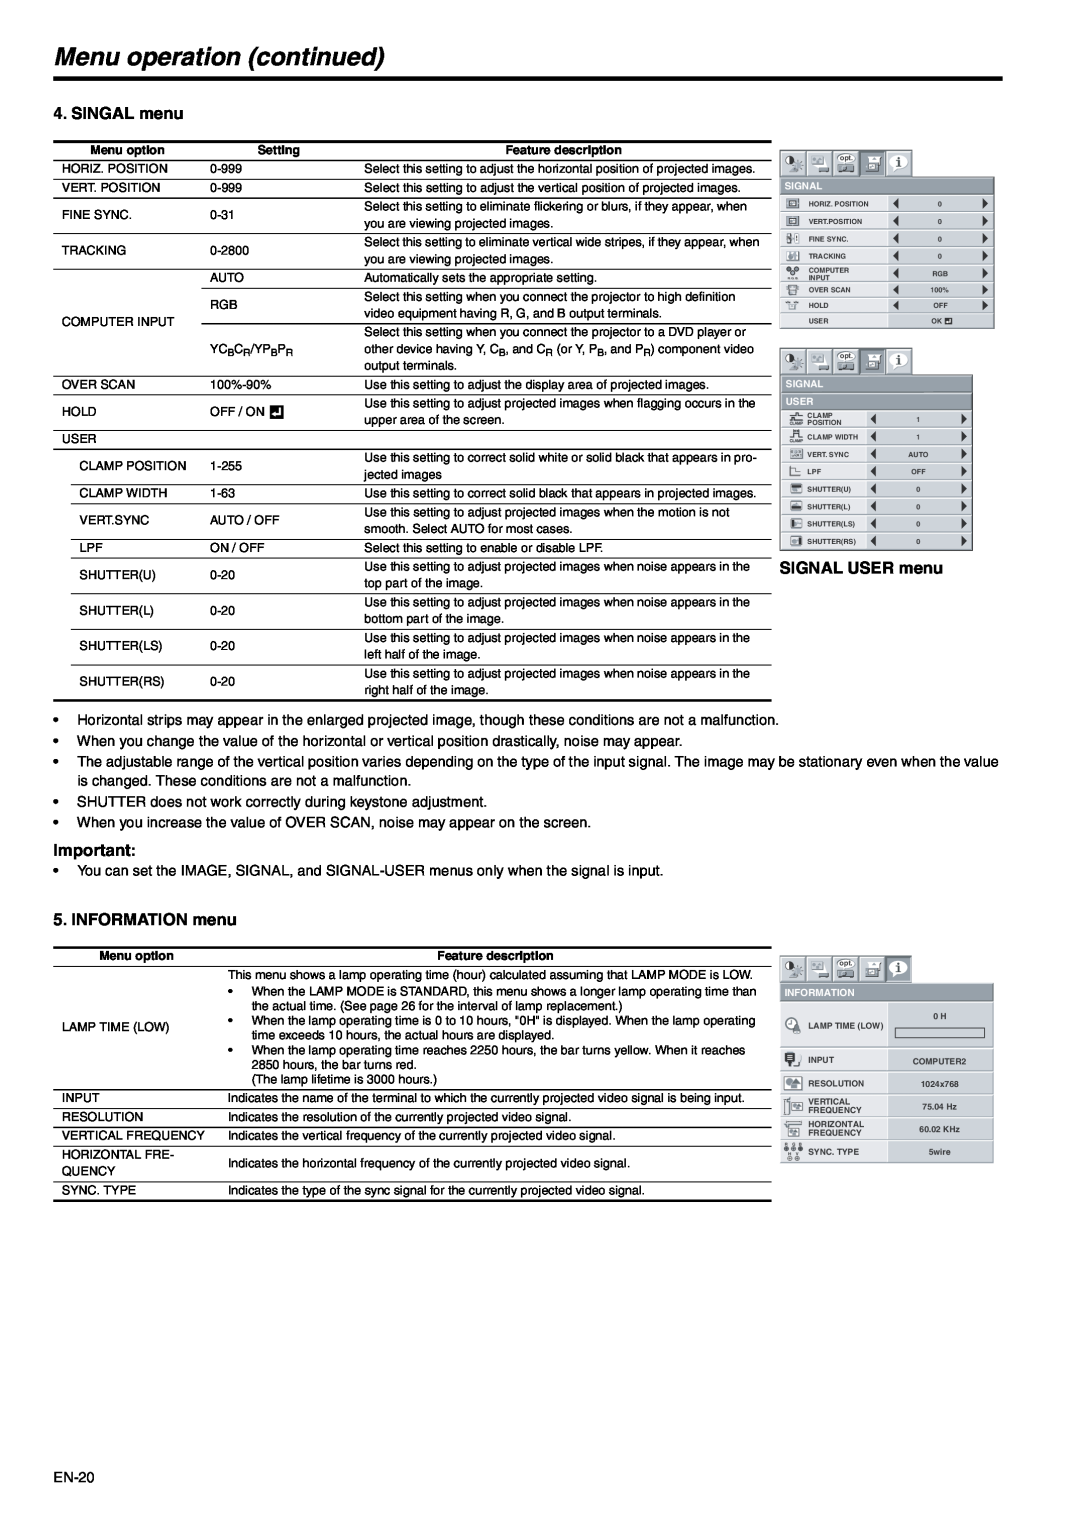 Mitsubishi Electronics XD500U-ST user manual SINGAL menu, SIGNAL USER menu, INFORMATION menu, Menu operation continued 